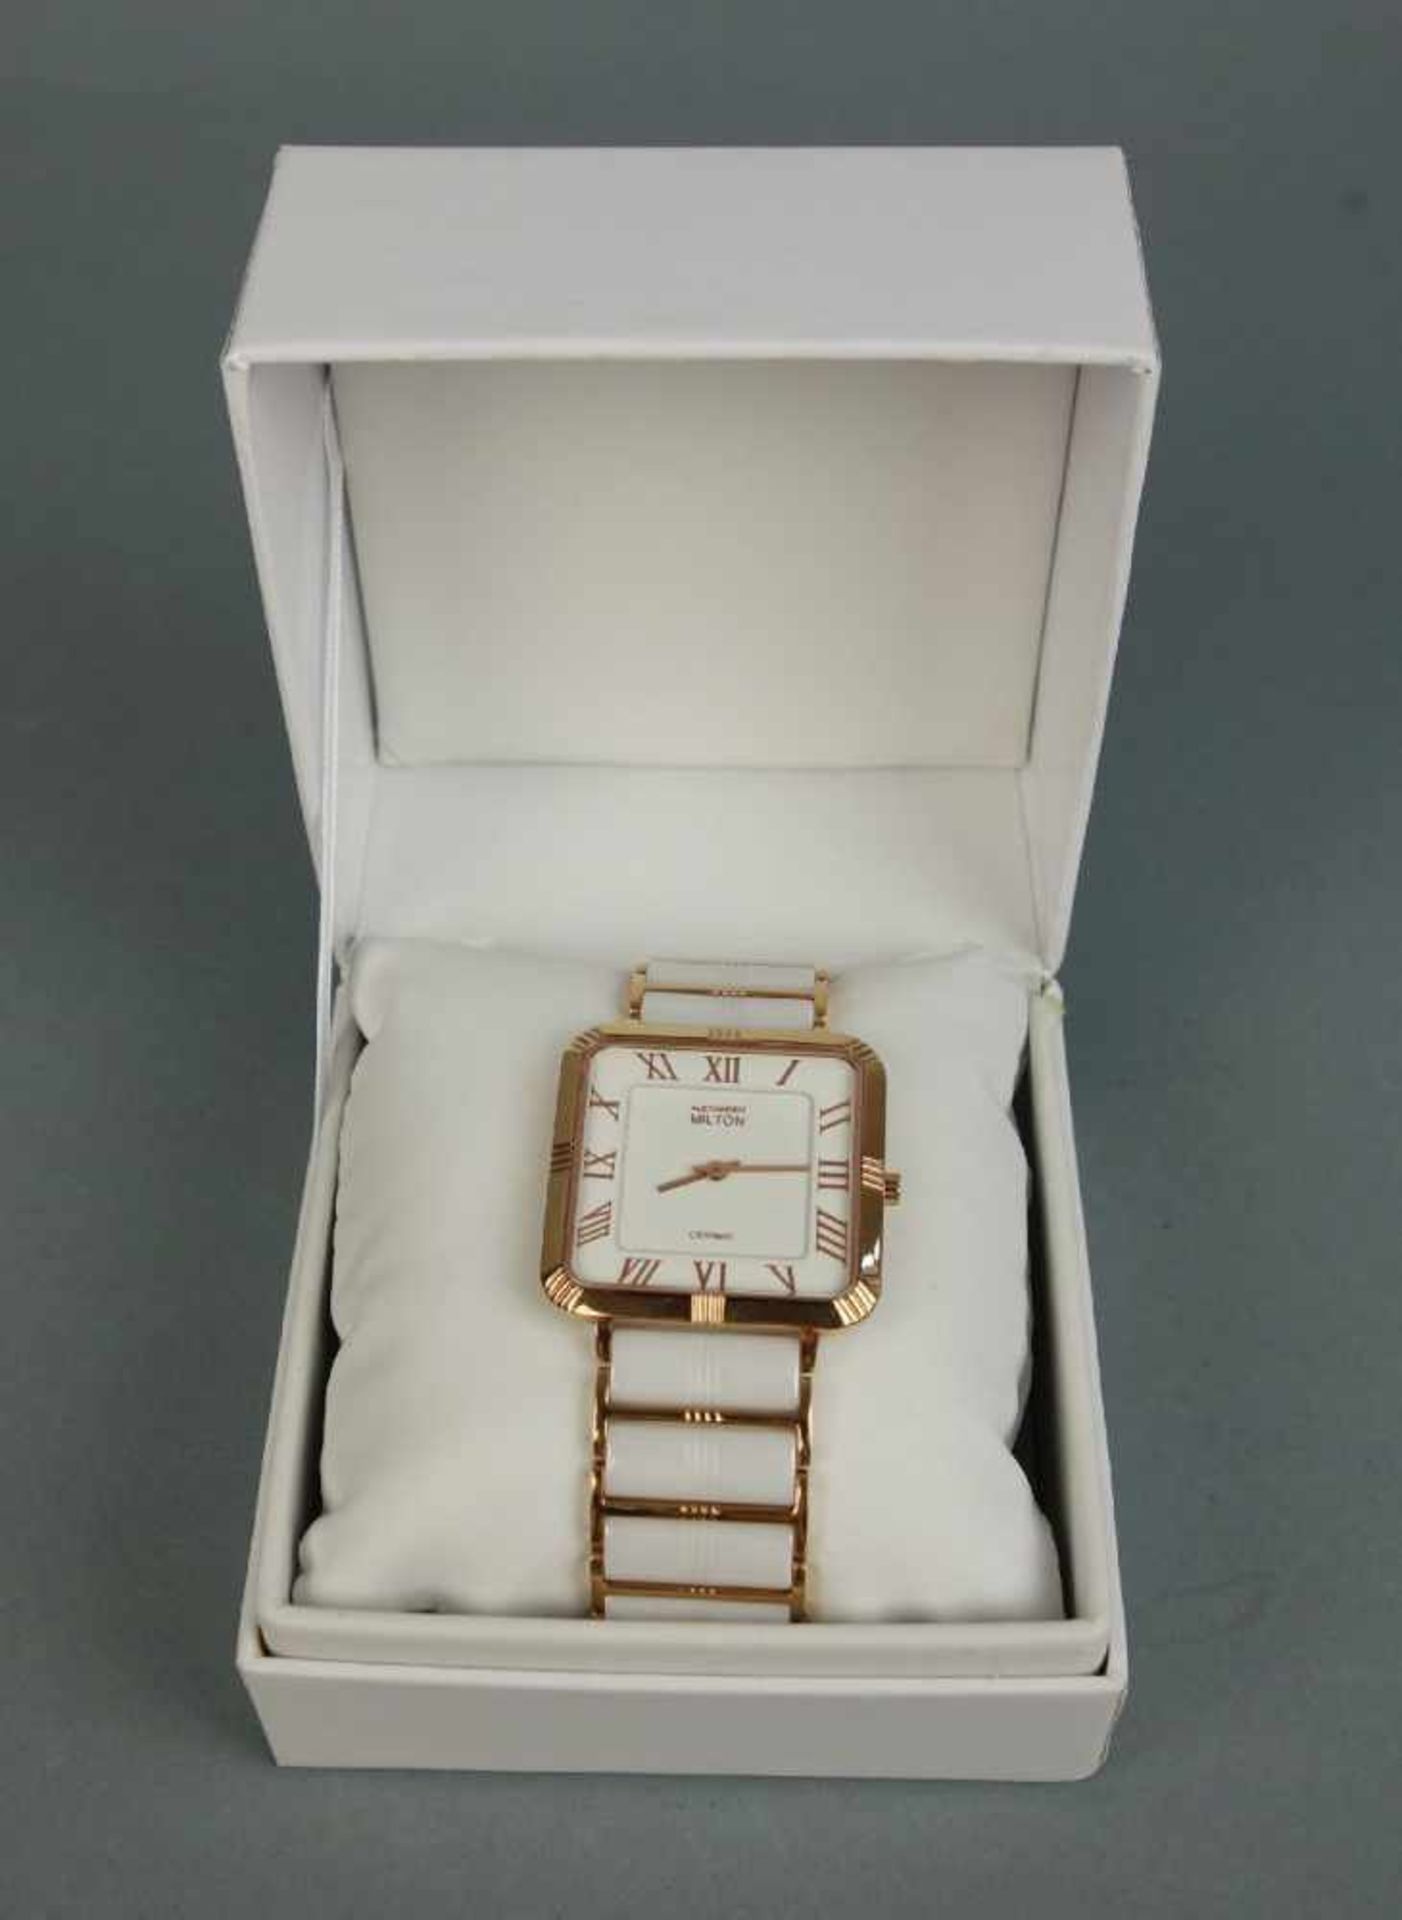 KERAMIK-ARMBANDUHR - ALEXANDER MILTON / wristwatch, Quarz-Uhr, Manufaktur Alexander Milton / - Bild 4 aus 5